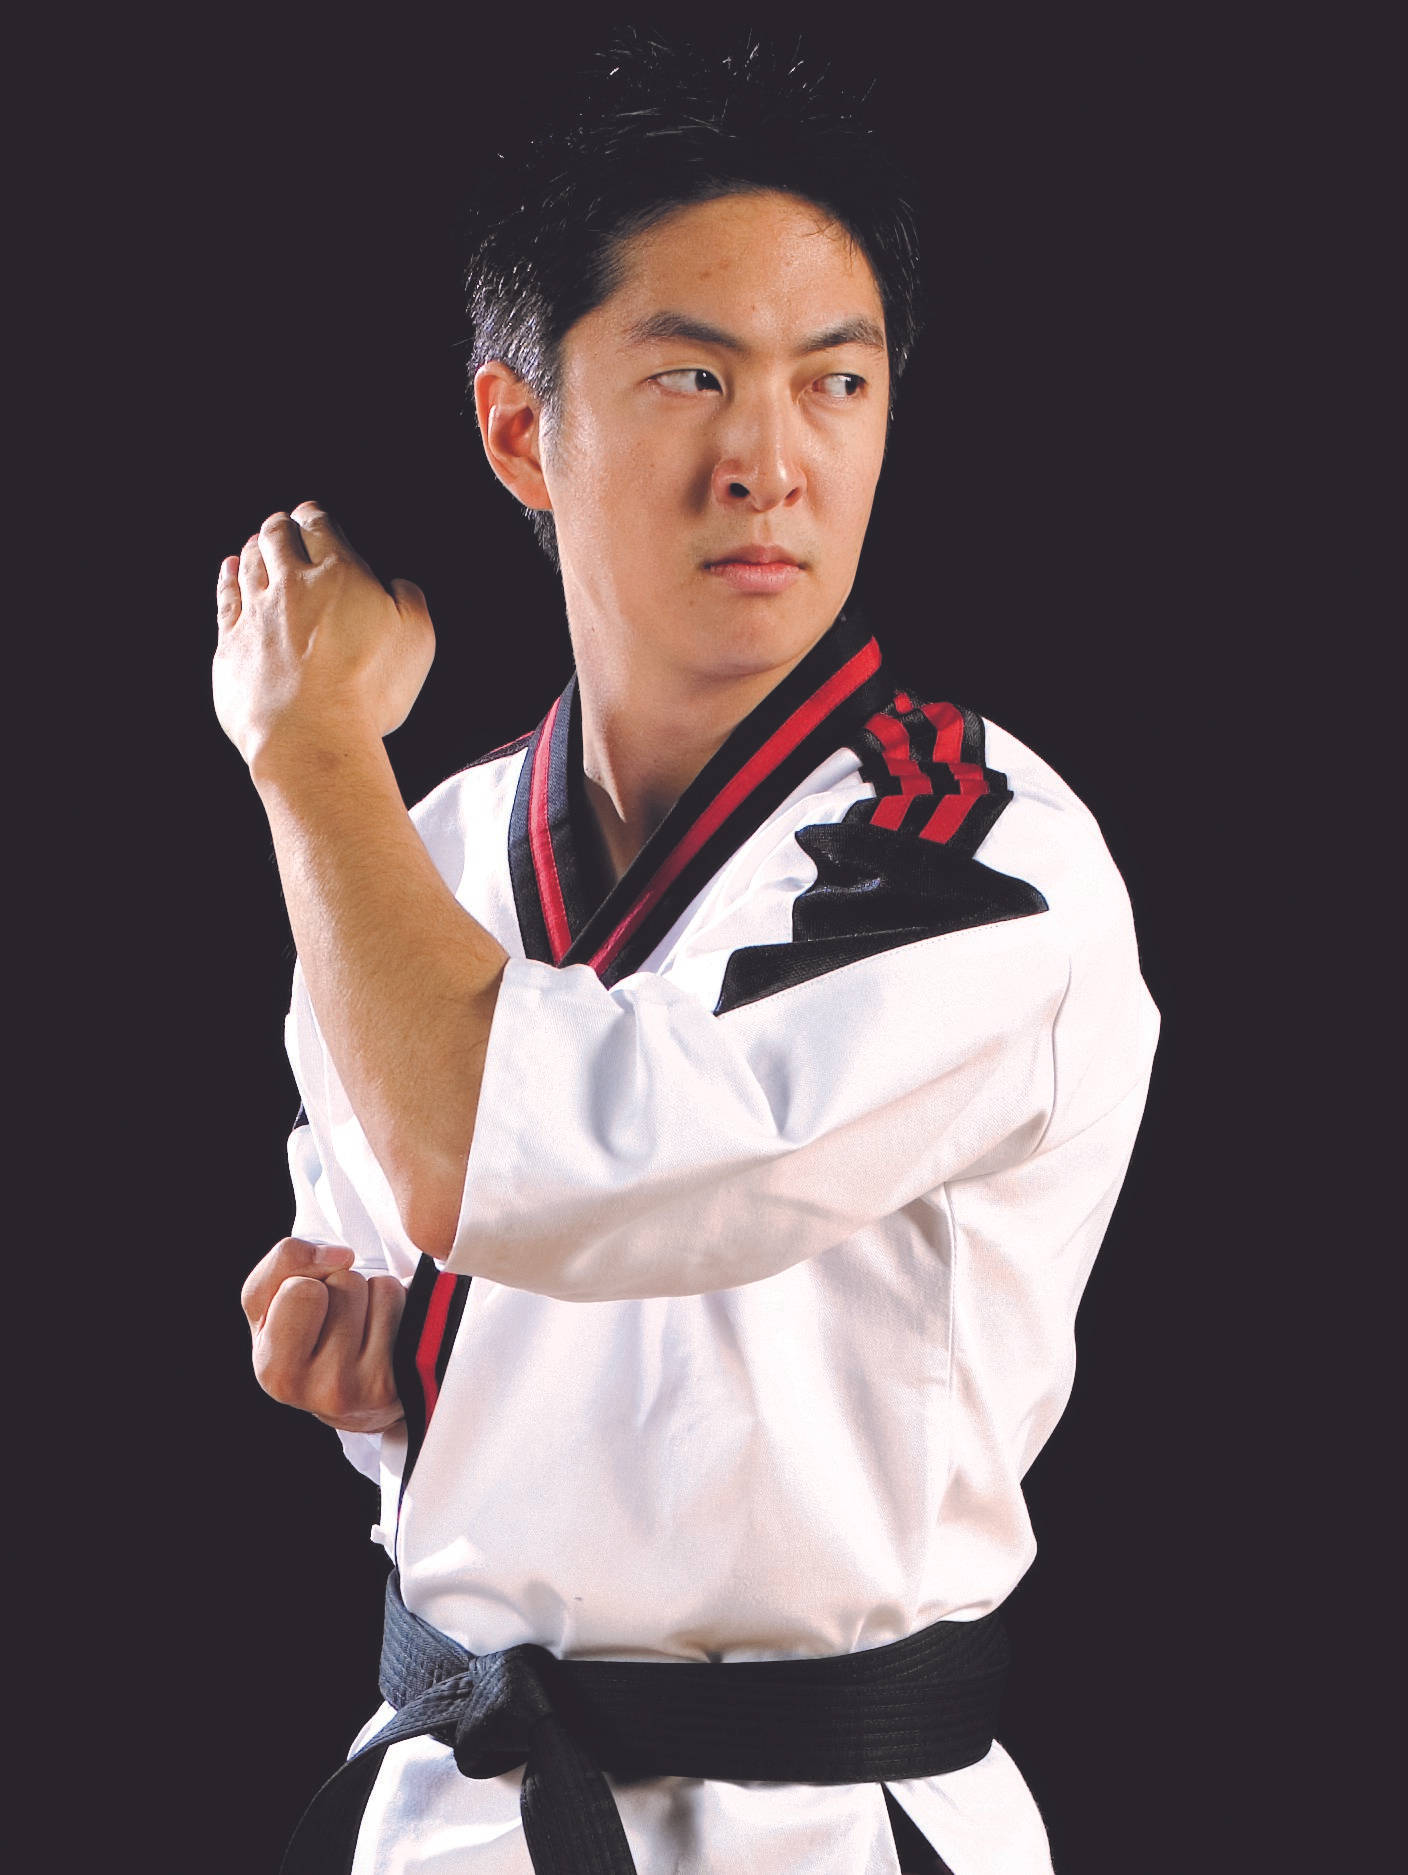 Karate Man Black And Red Uniform Wallpaper